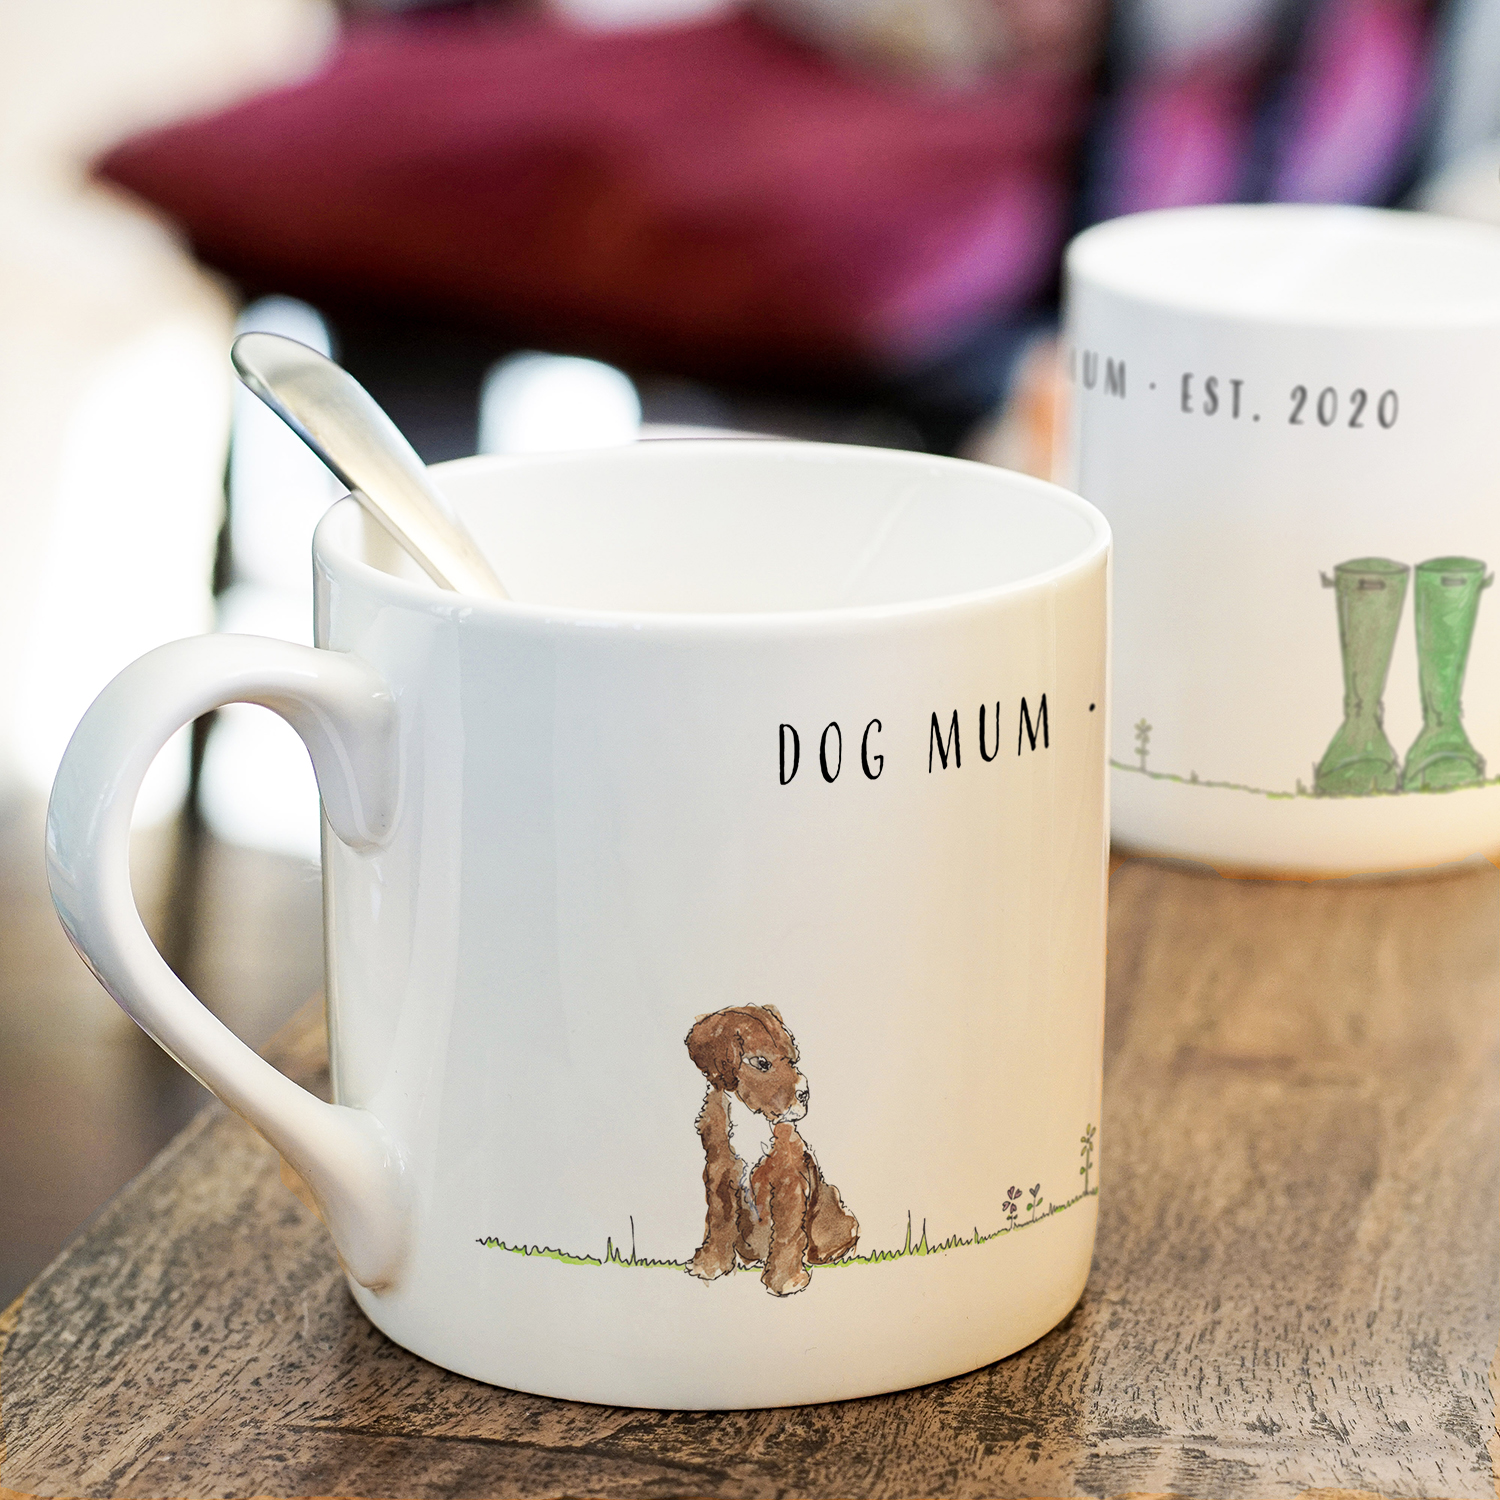 Dogg mum Кружка. Mum cup